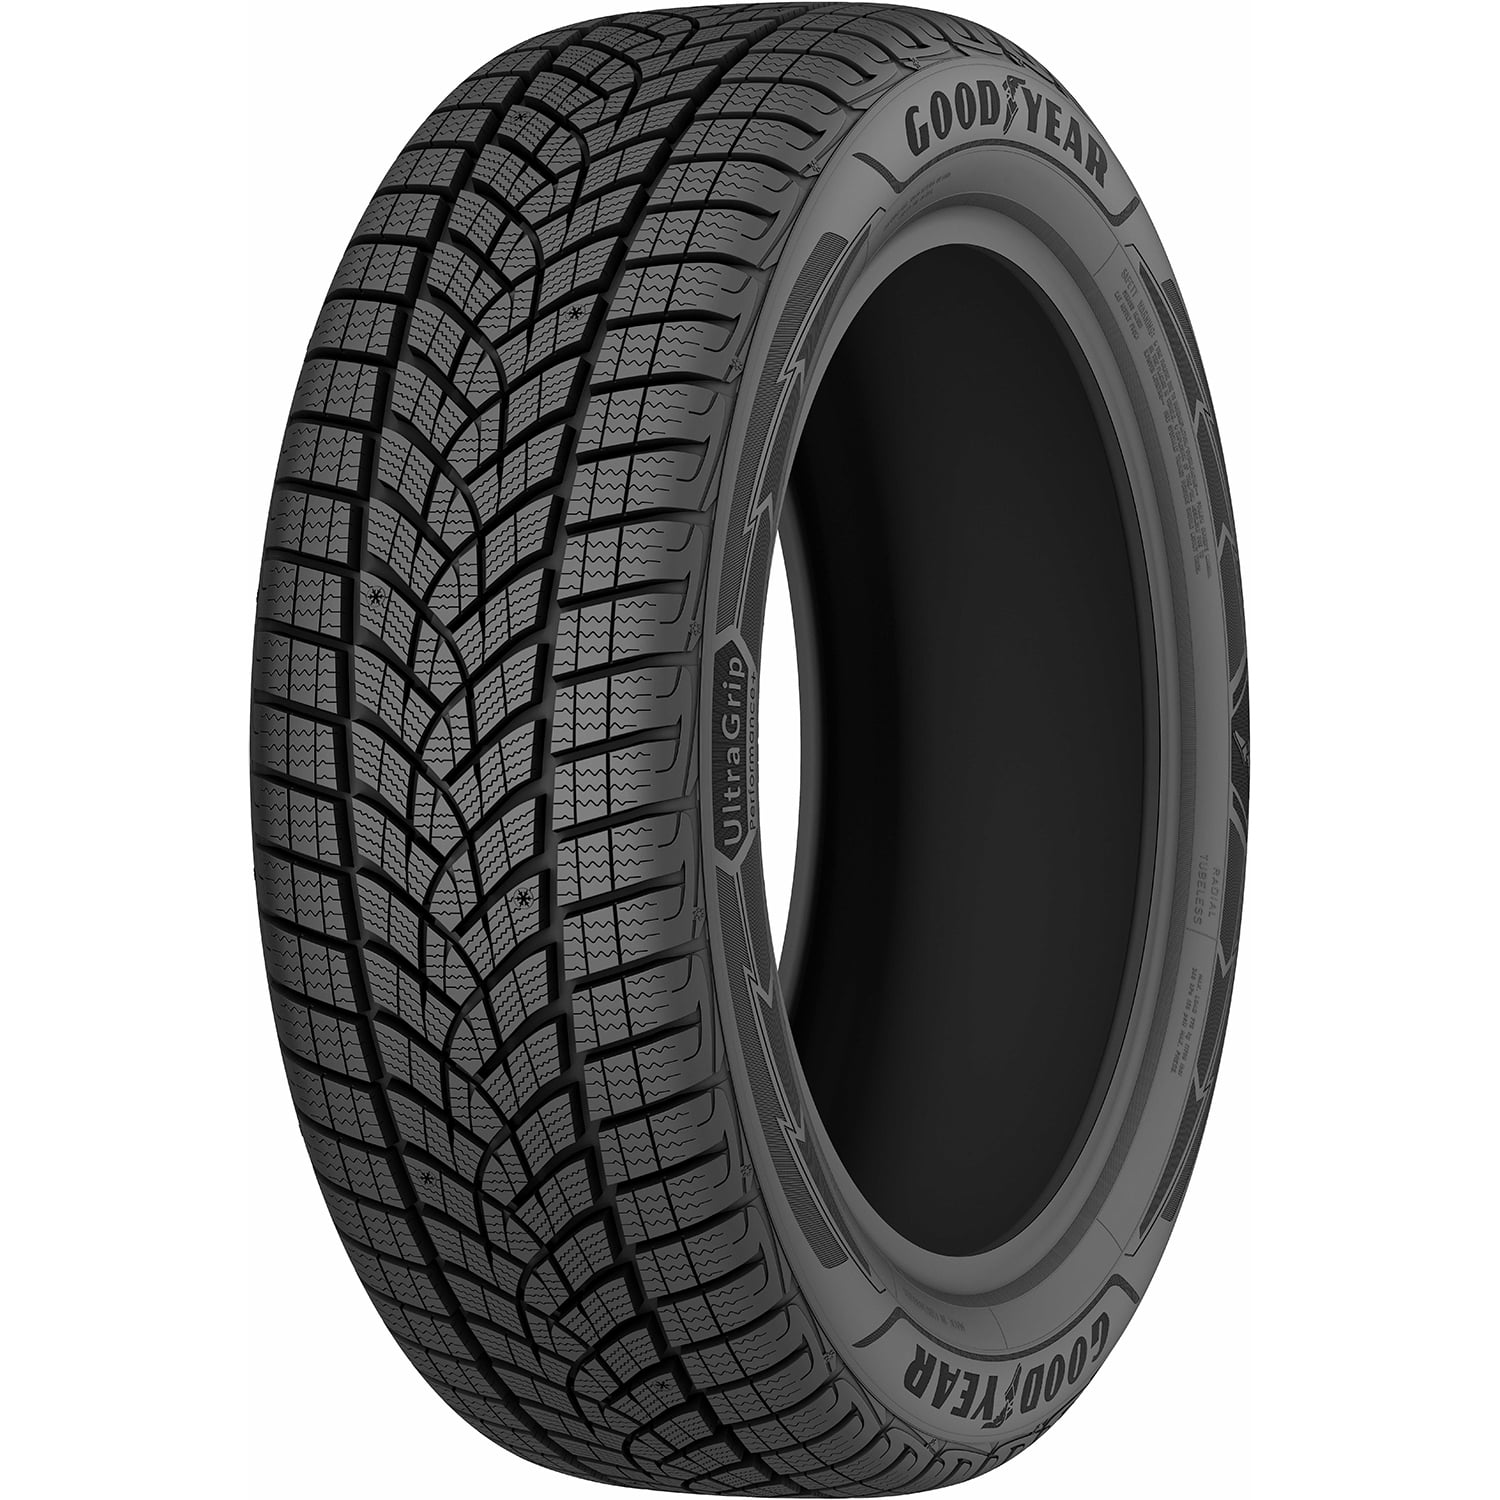 Tire Goodyear Ultra Grip Performance + SUV 215/60R17 100V XL Performance